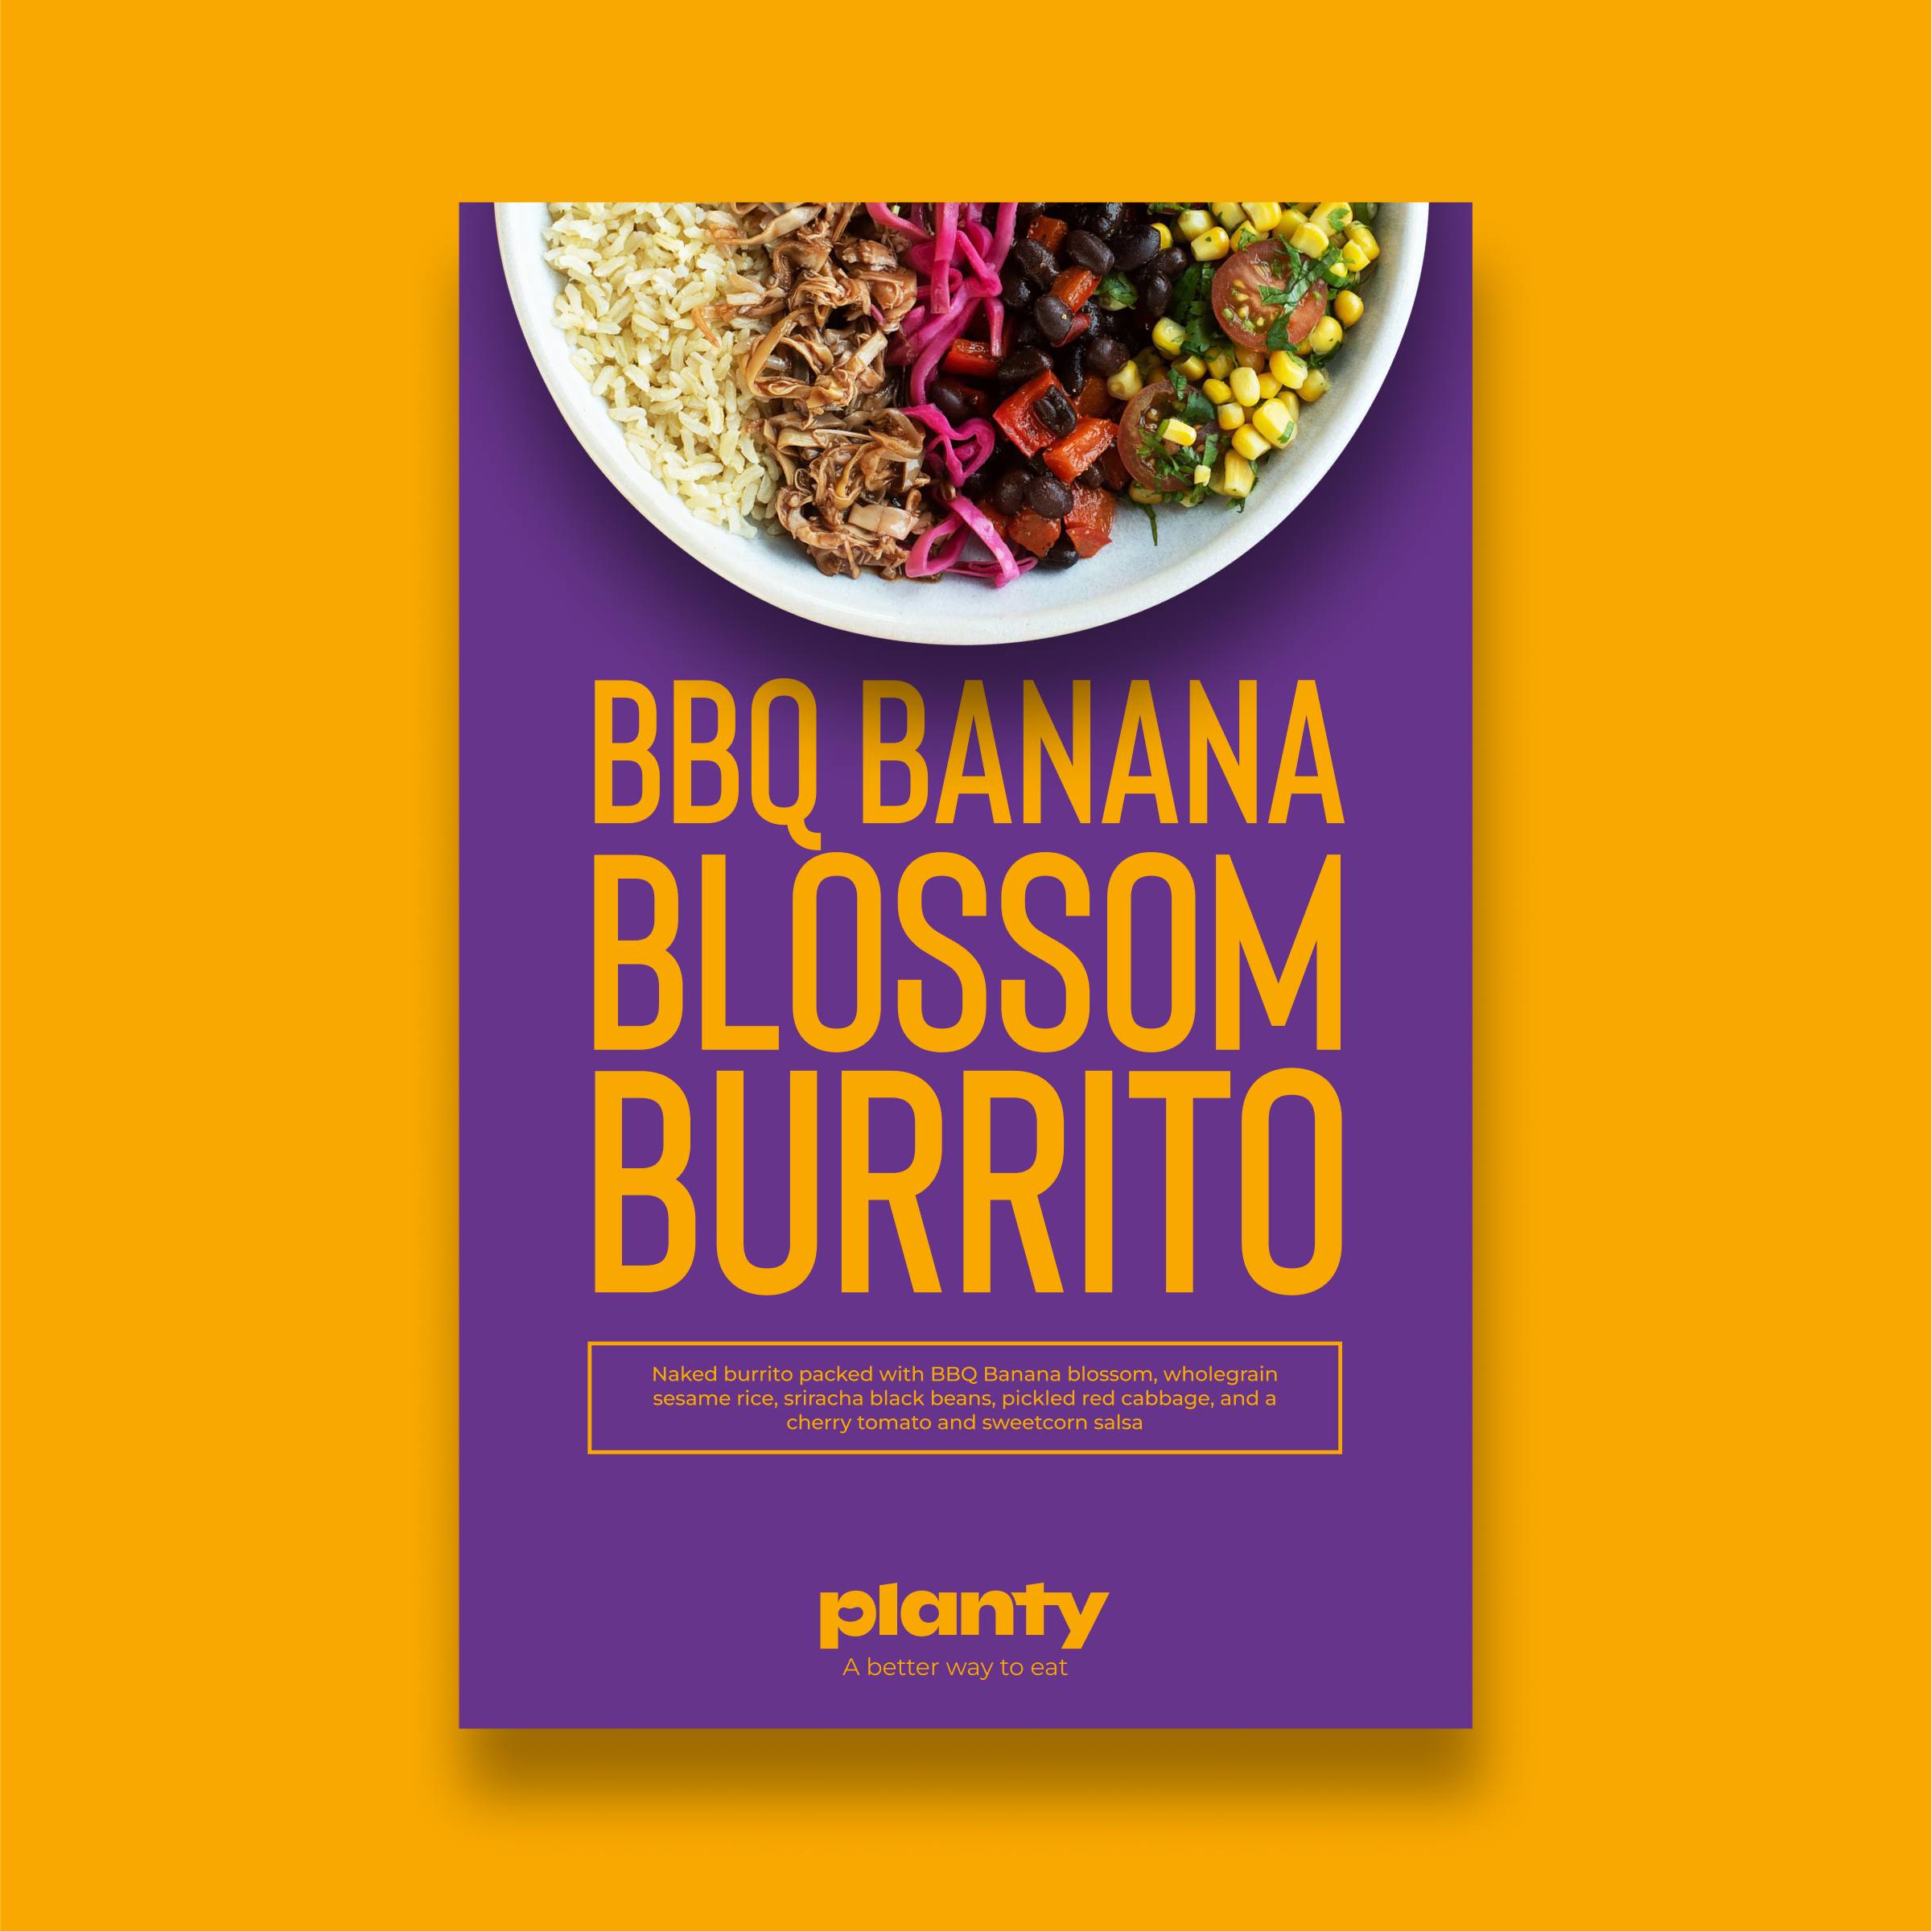 BBQ Banana Blossom Burrito image 2